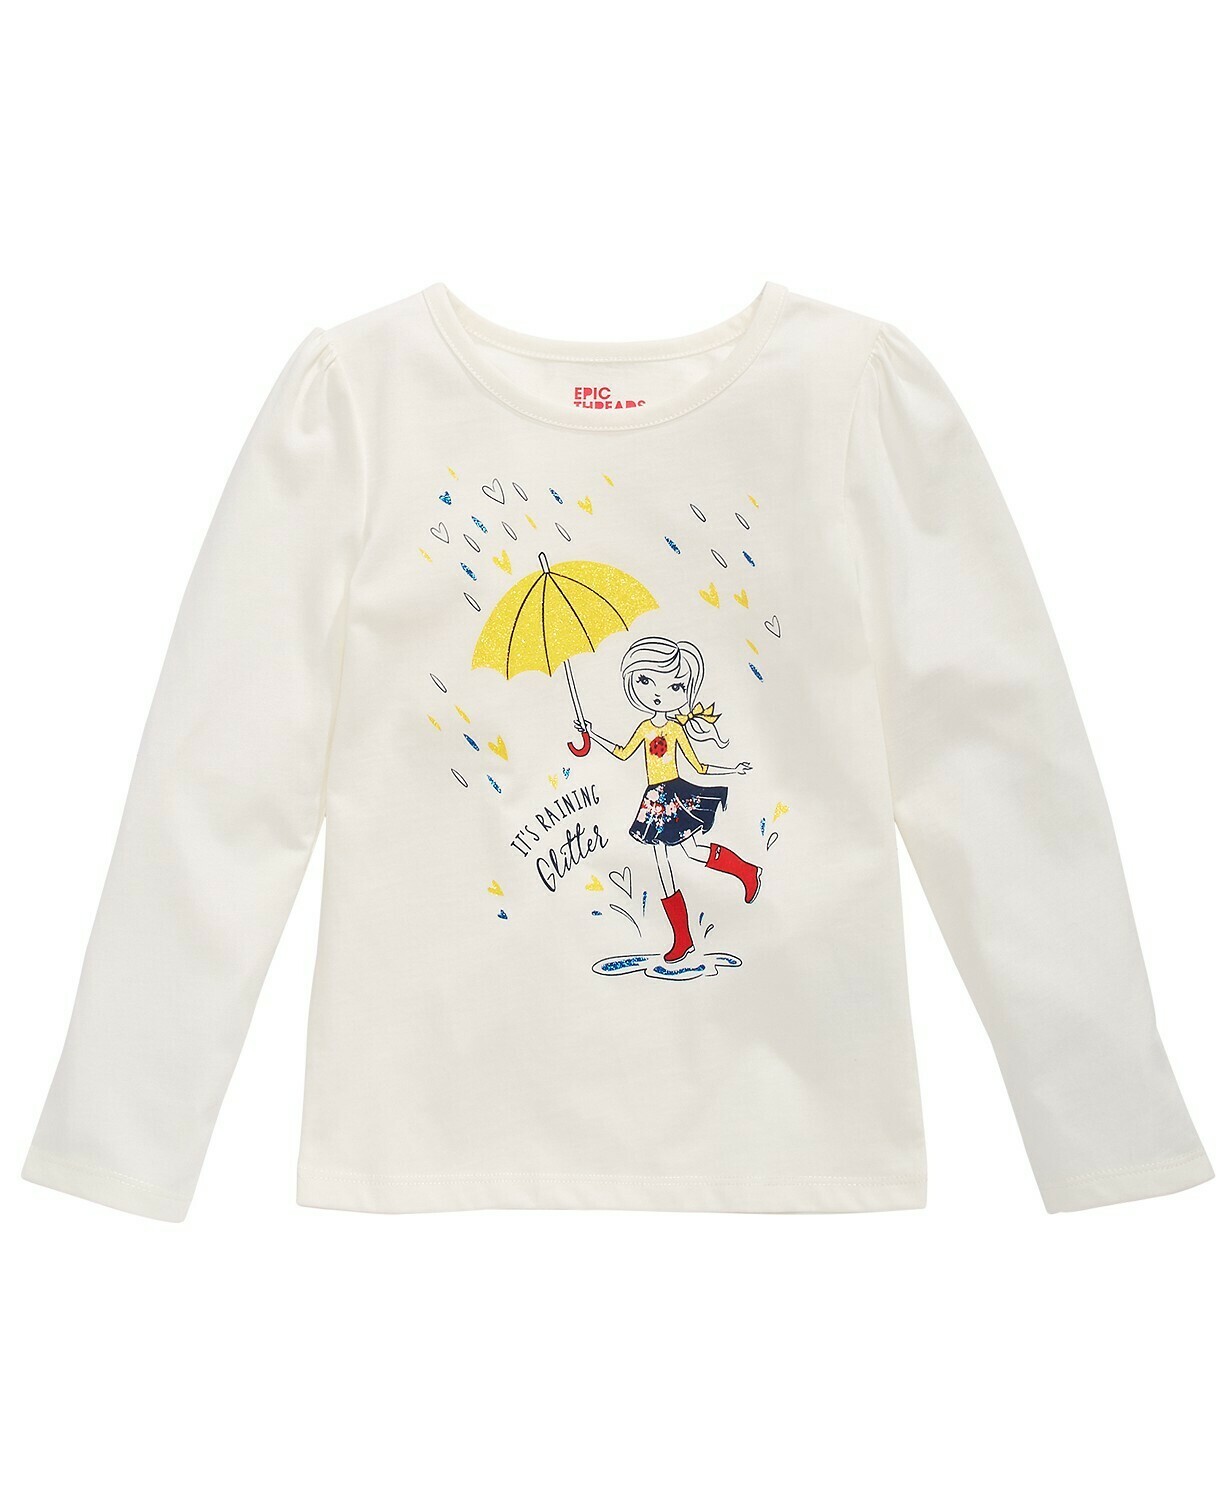 Epic Threads Toddler Girls It's Raining Glitter T-Shirt